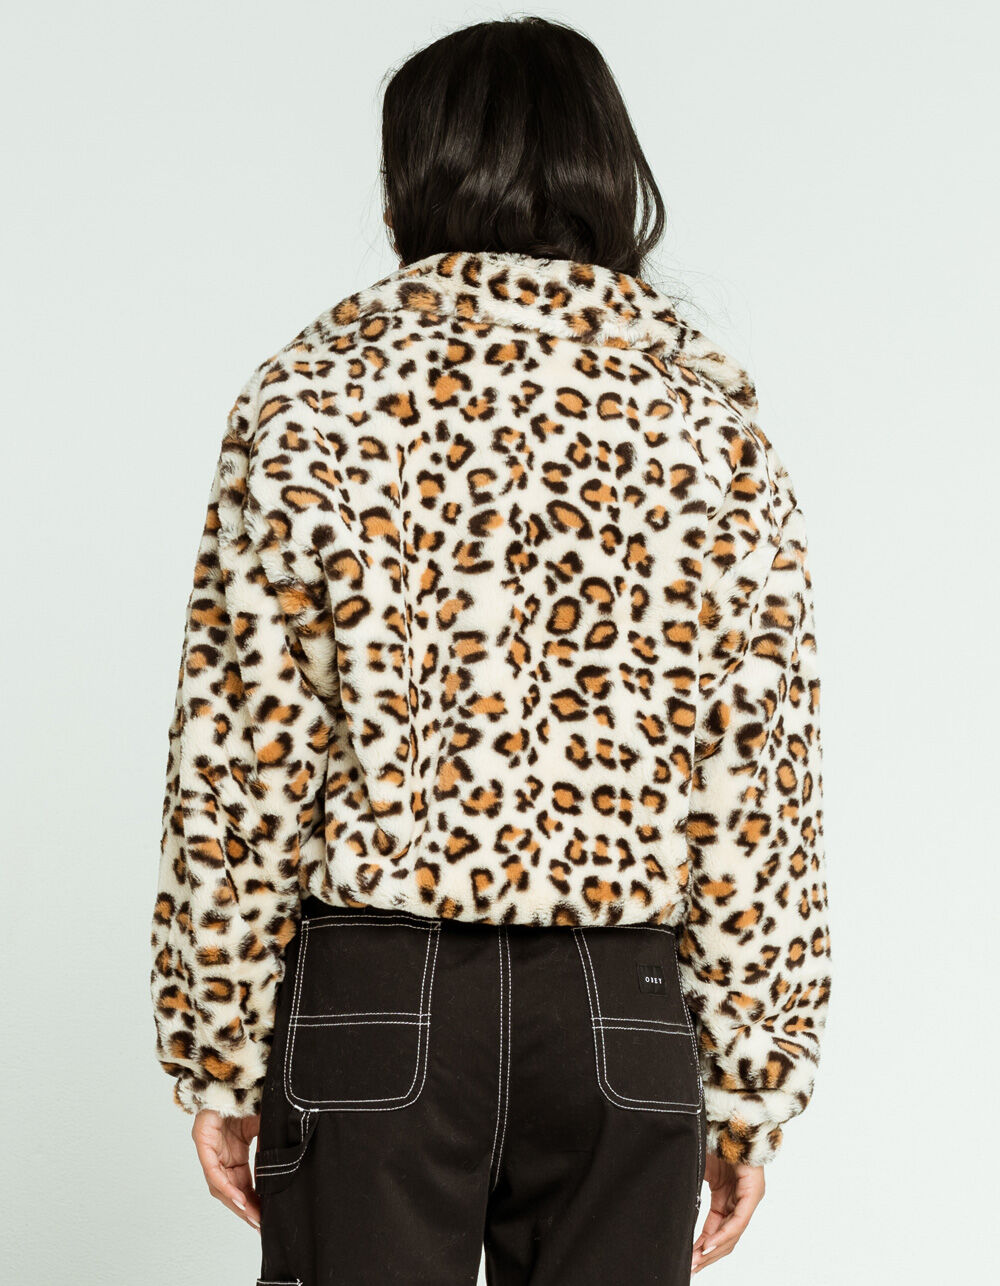 KNOW ONE CARES Leopard Faux Fur Womens Bomber Jacket - LEOPARD | Tillys